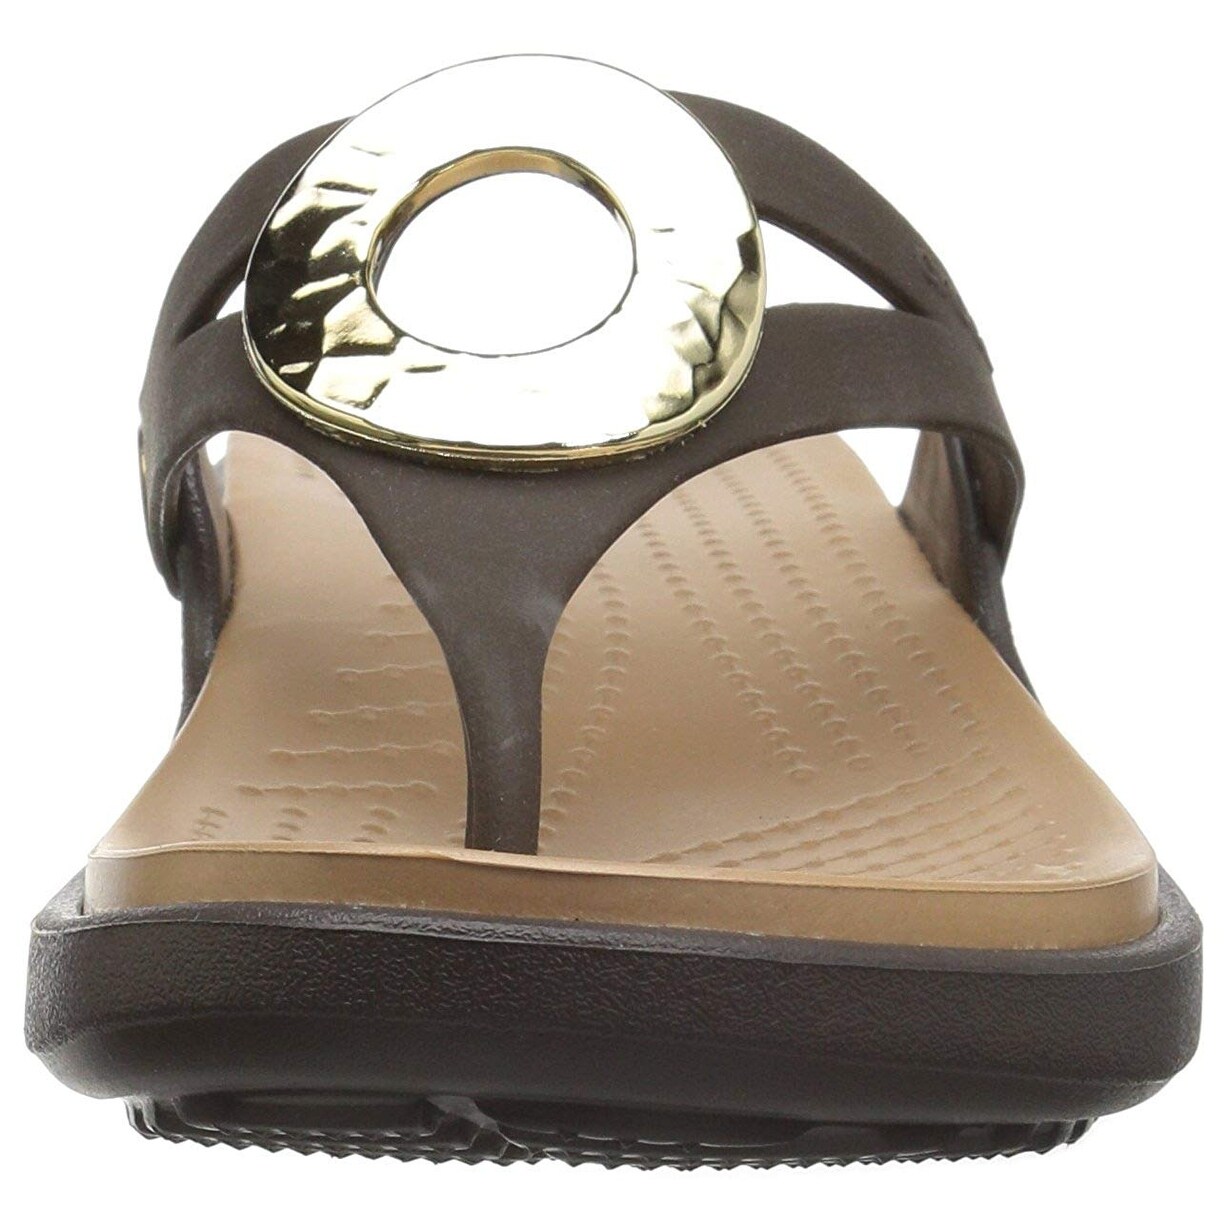 women's sanrah hammered metallic sandals